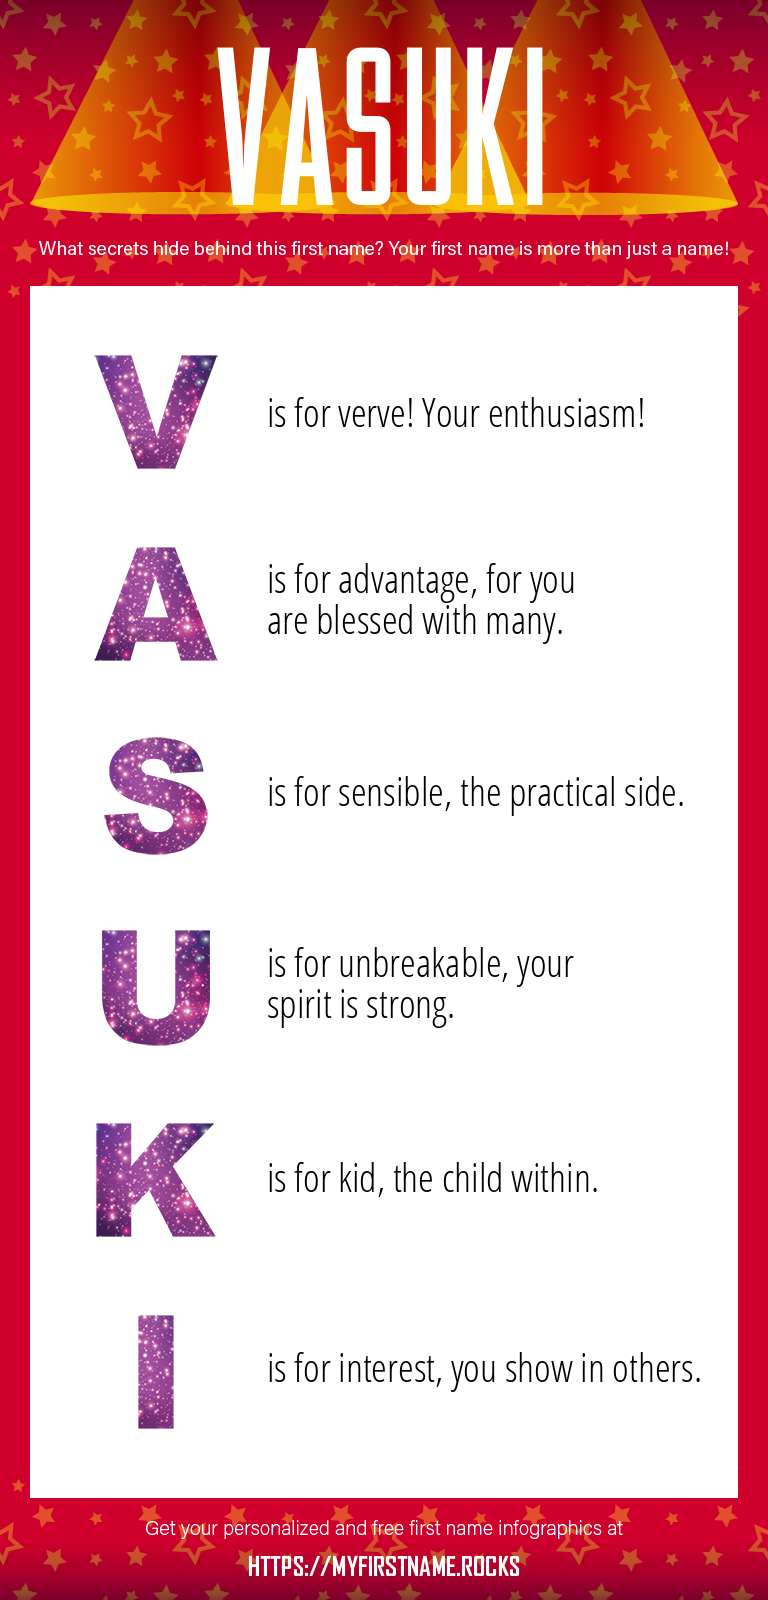 Vasuki Infographics